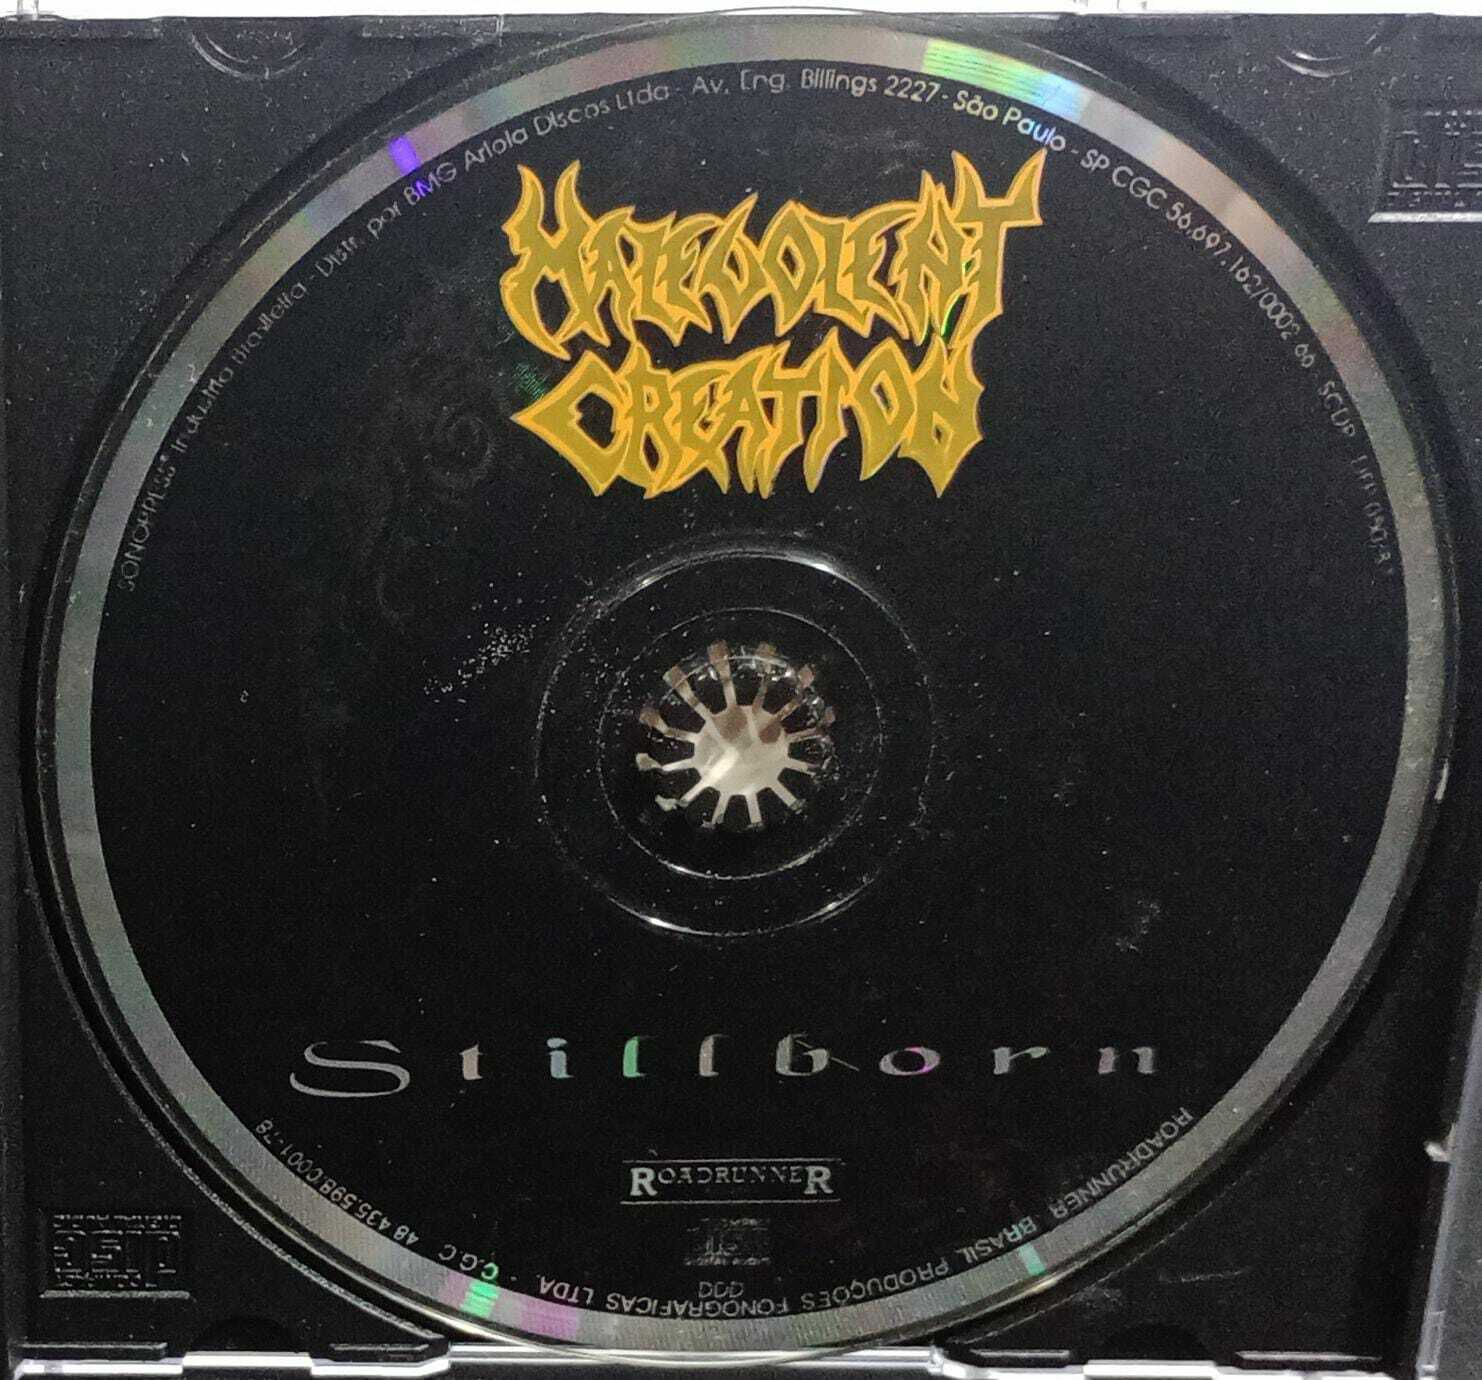 CD - Malevolent Creation - Stillborn